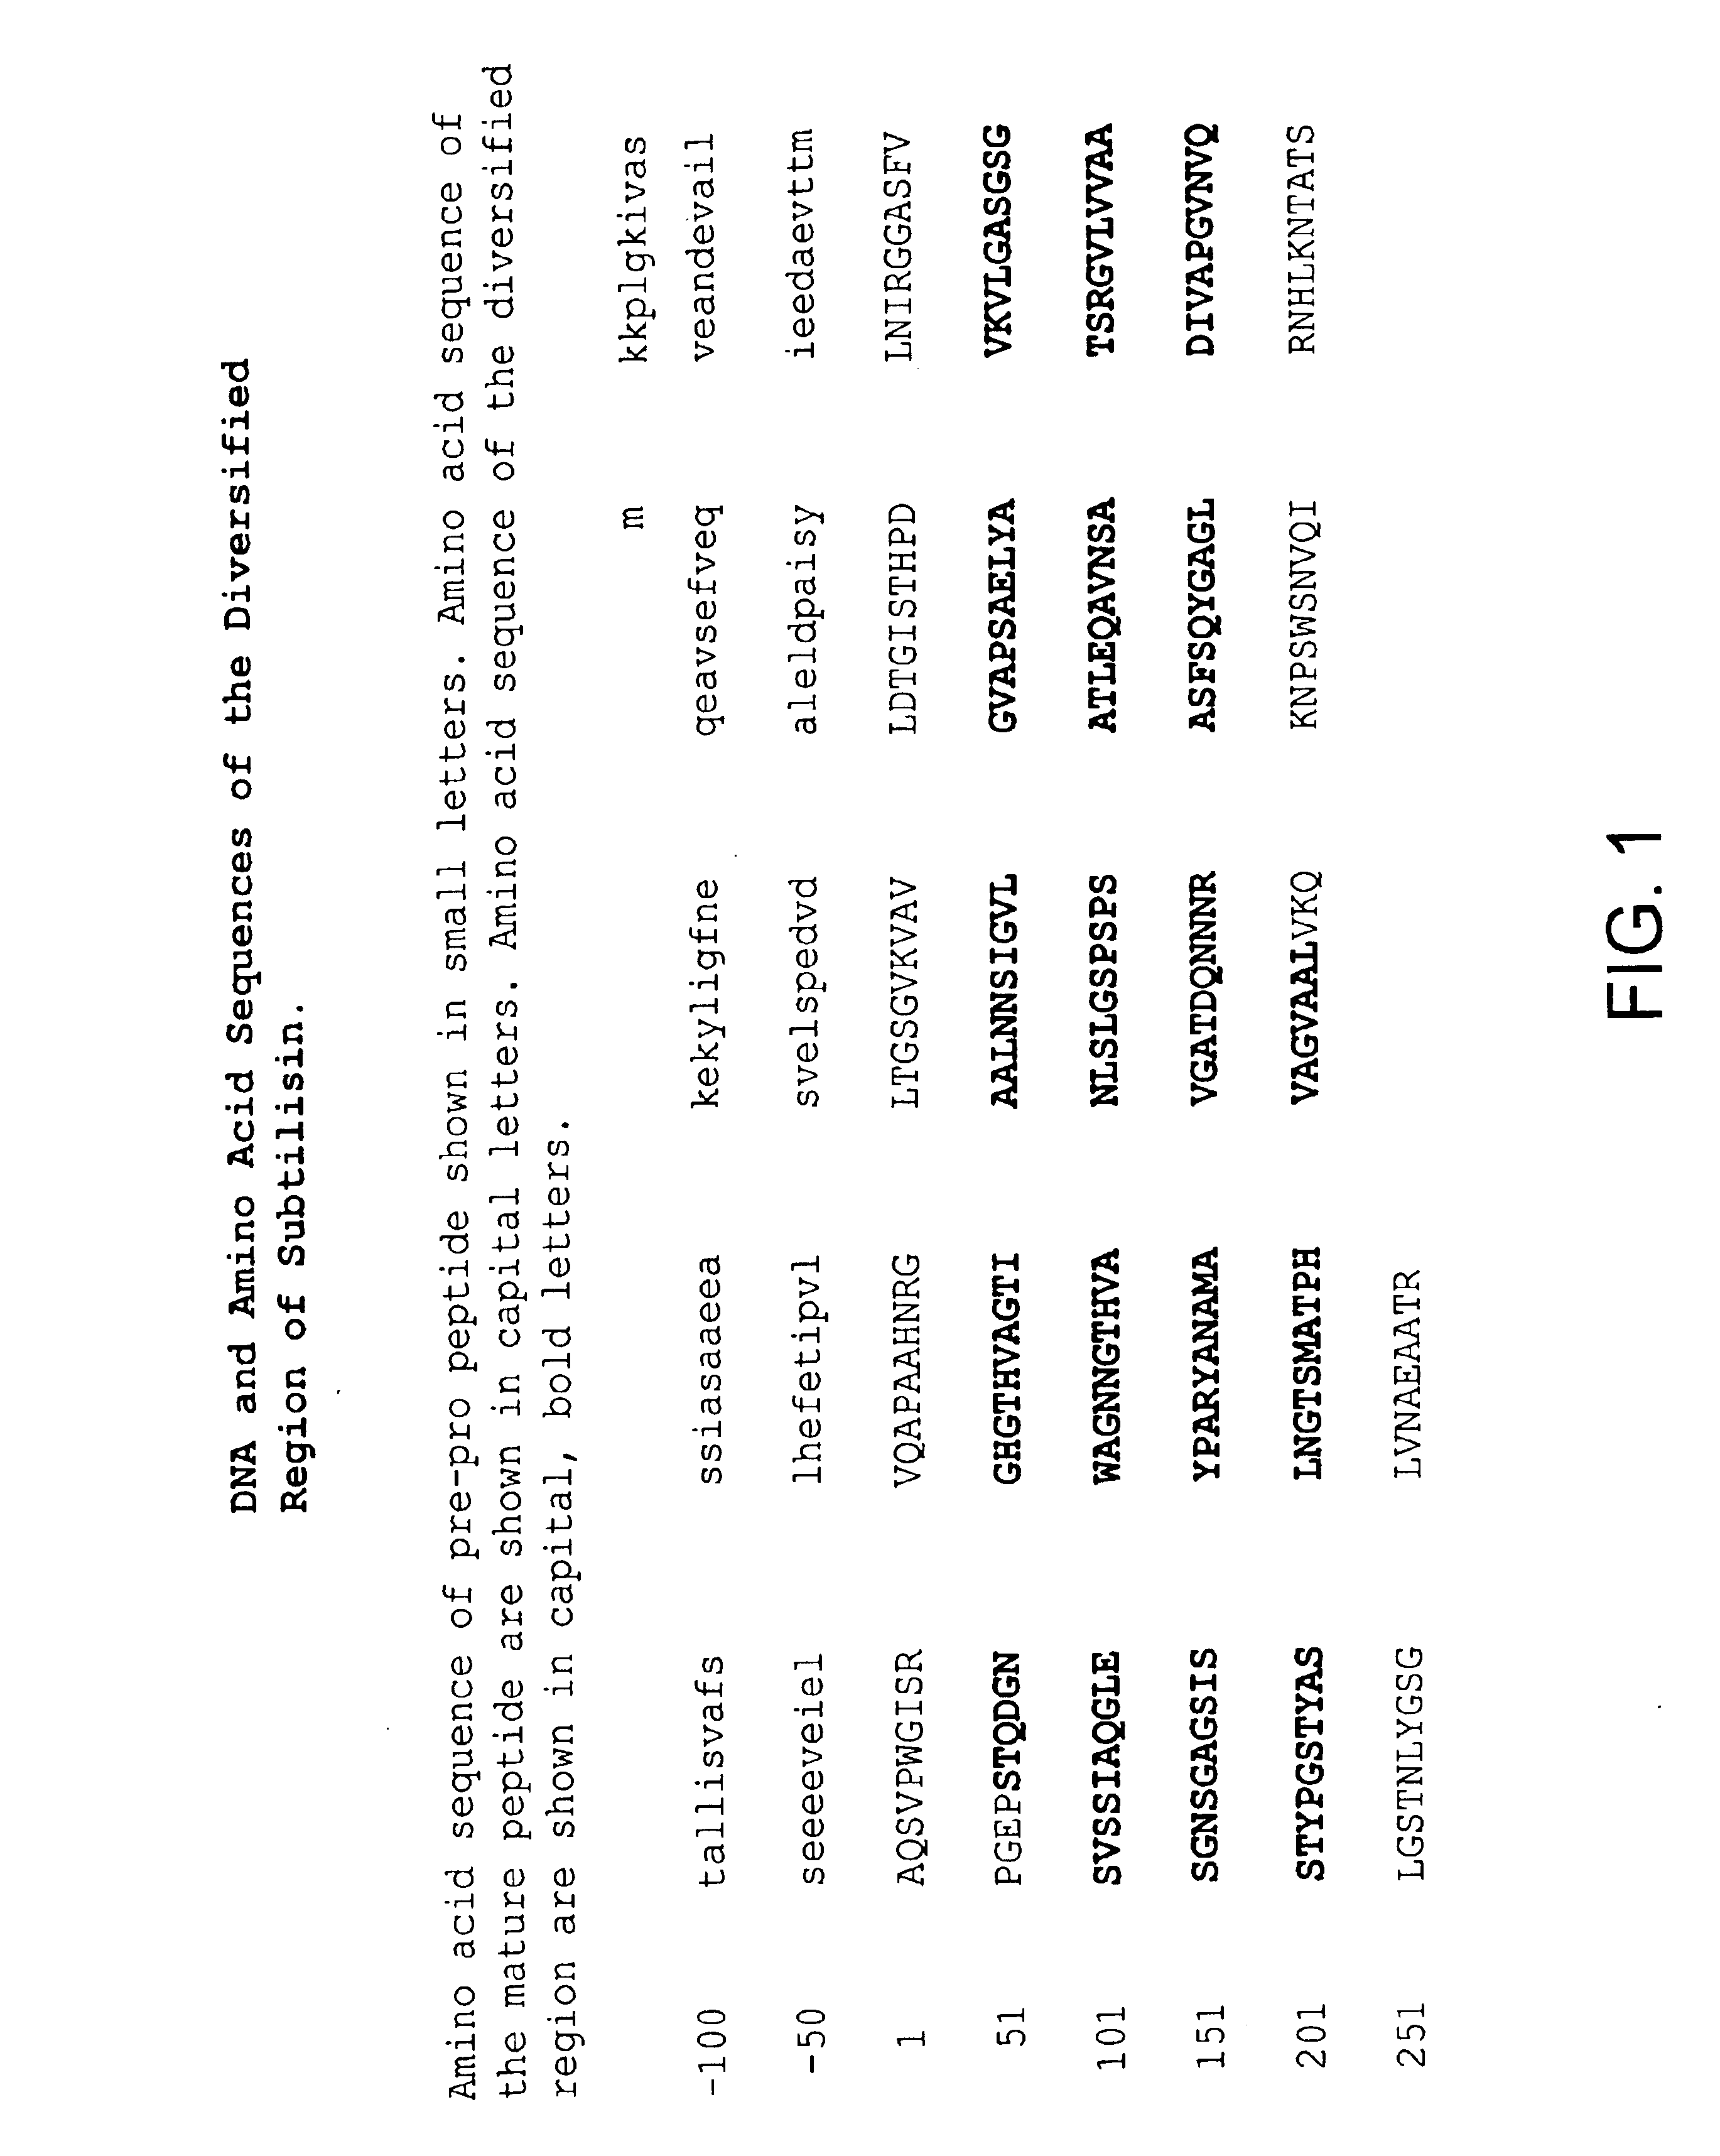 Subtilisin variants